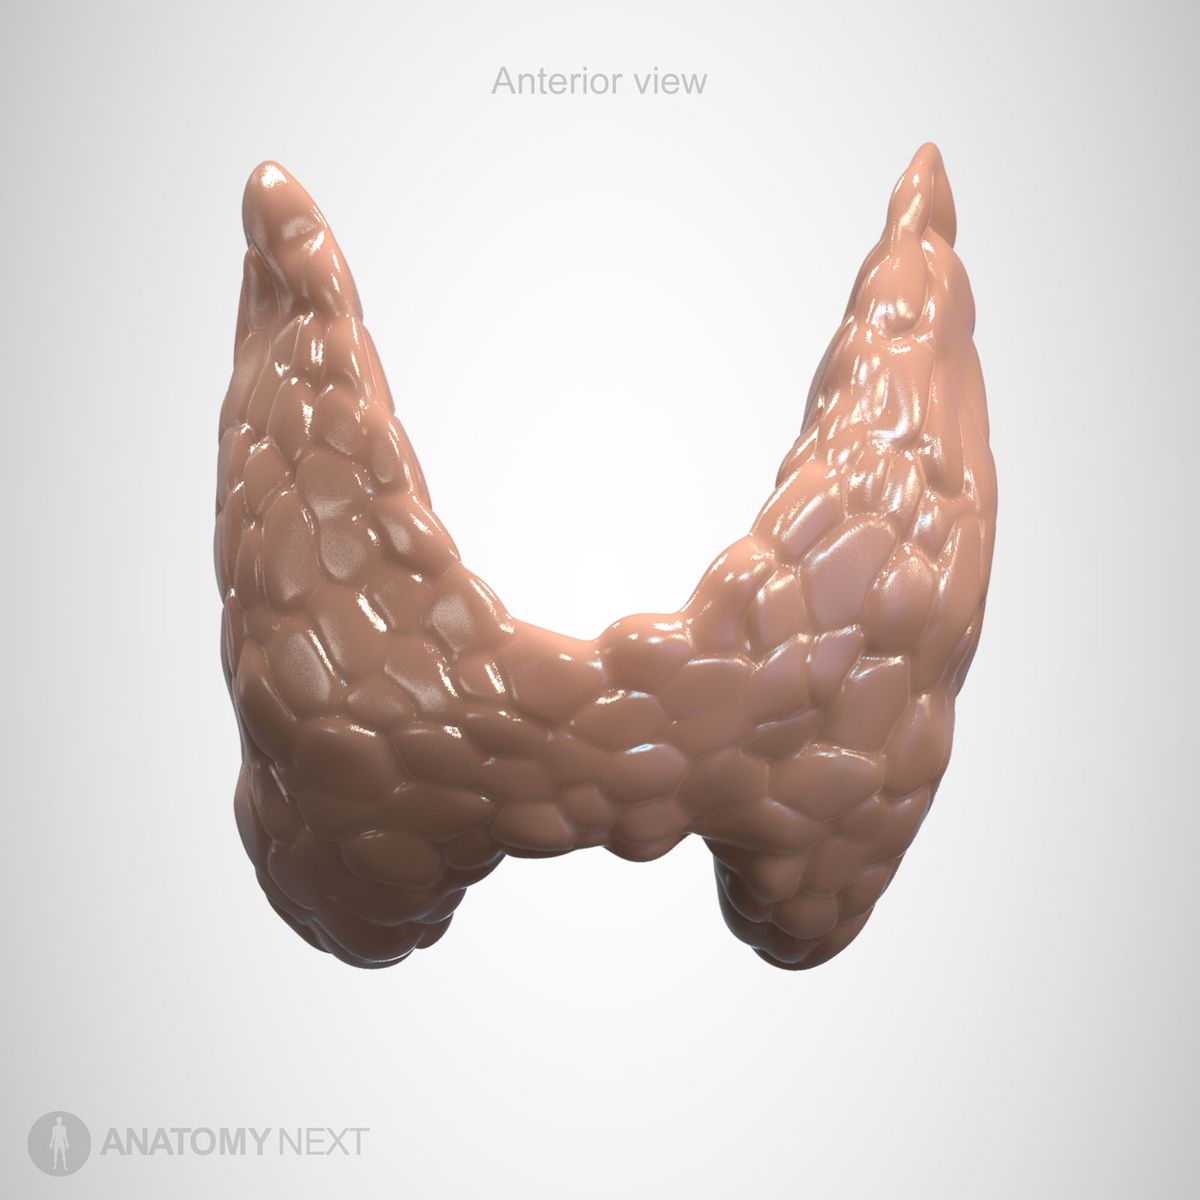 Thyroid gland, anterior view